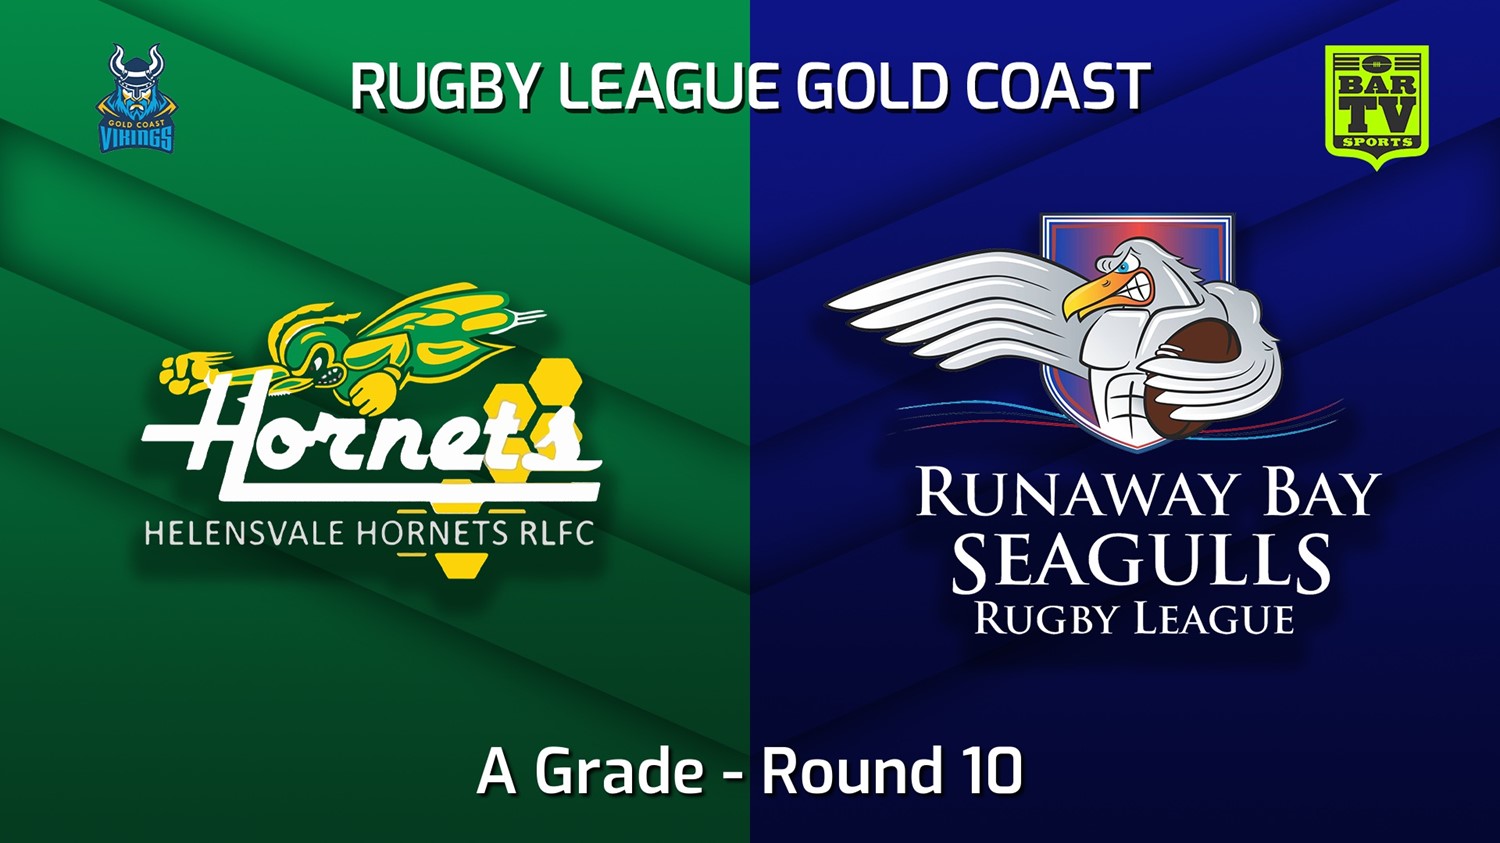 220612-Gold Coast Round 10 - A Grade - Helensvale Hornets v Runaway Bay Seagulls Slate Image